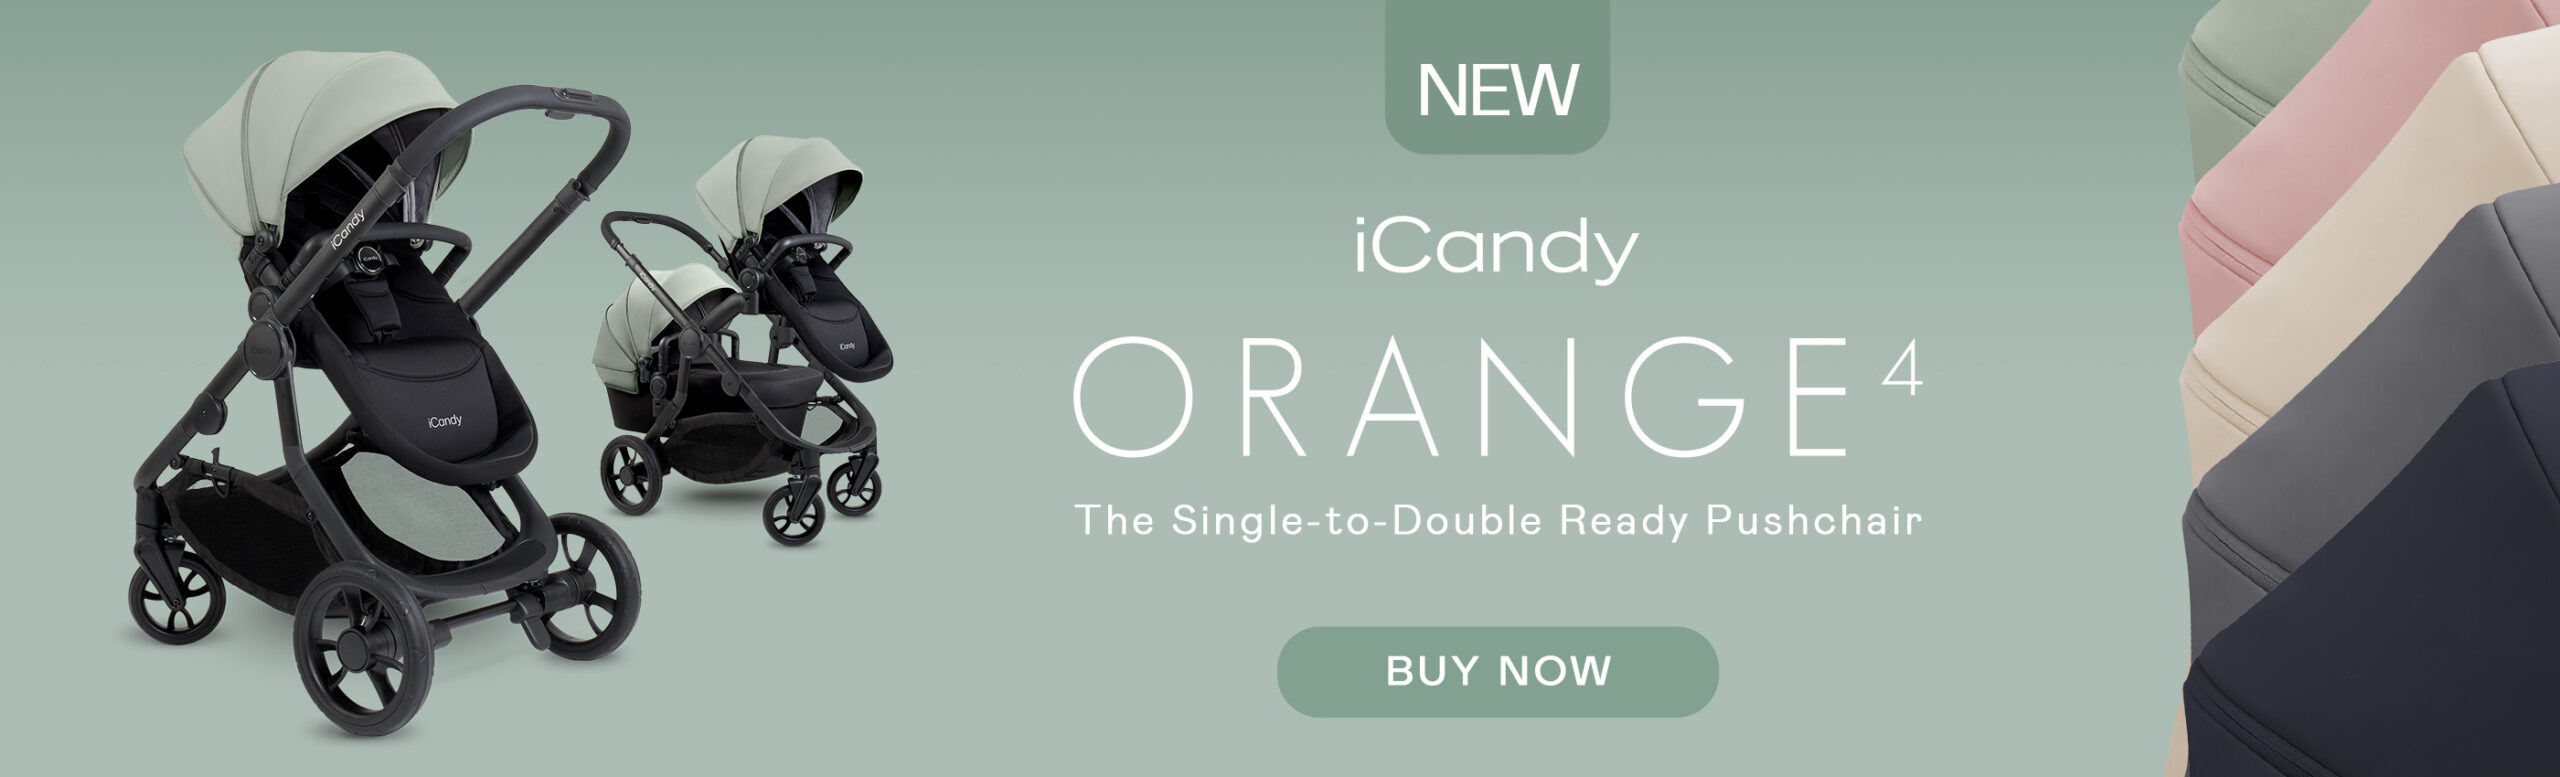 iCandy_Orange_4_Web_Banner_Shop_Now_2800x850px